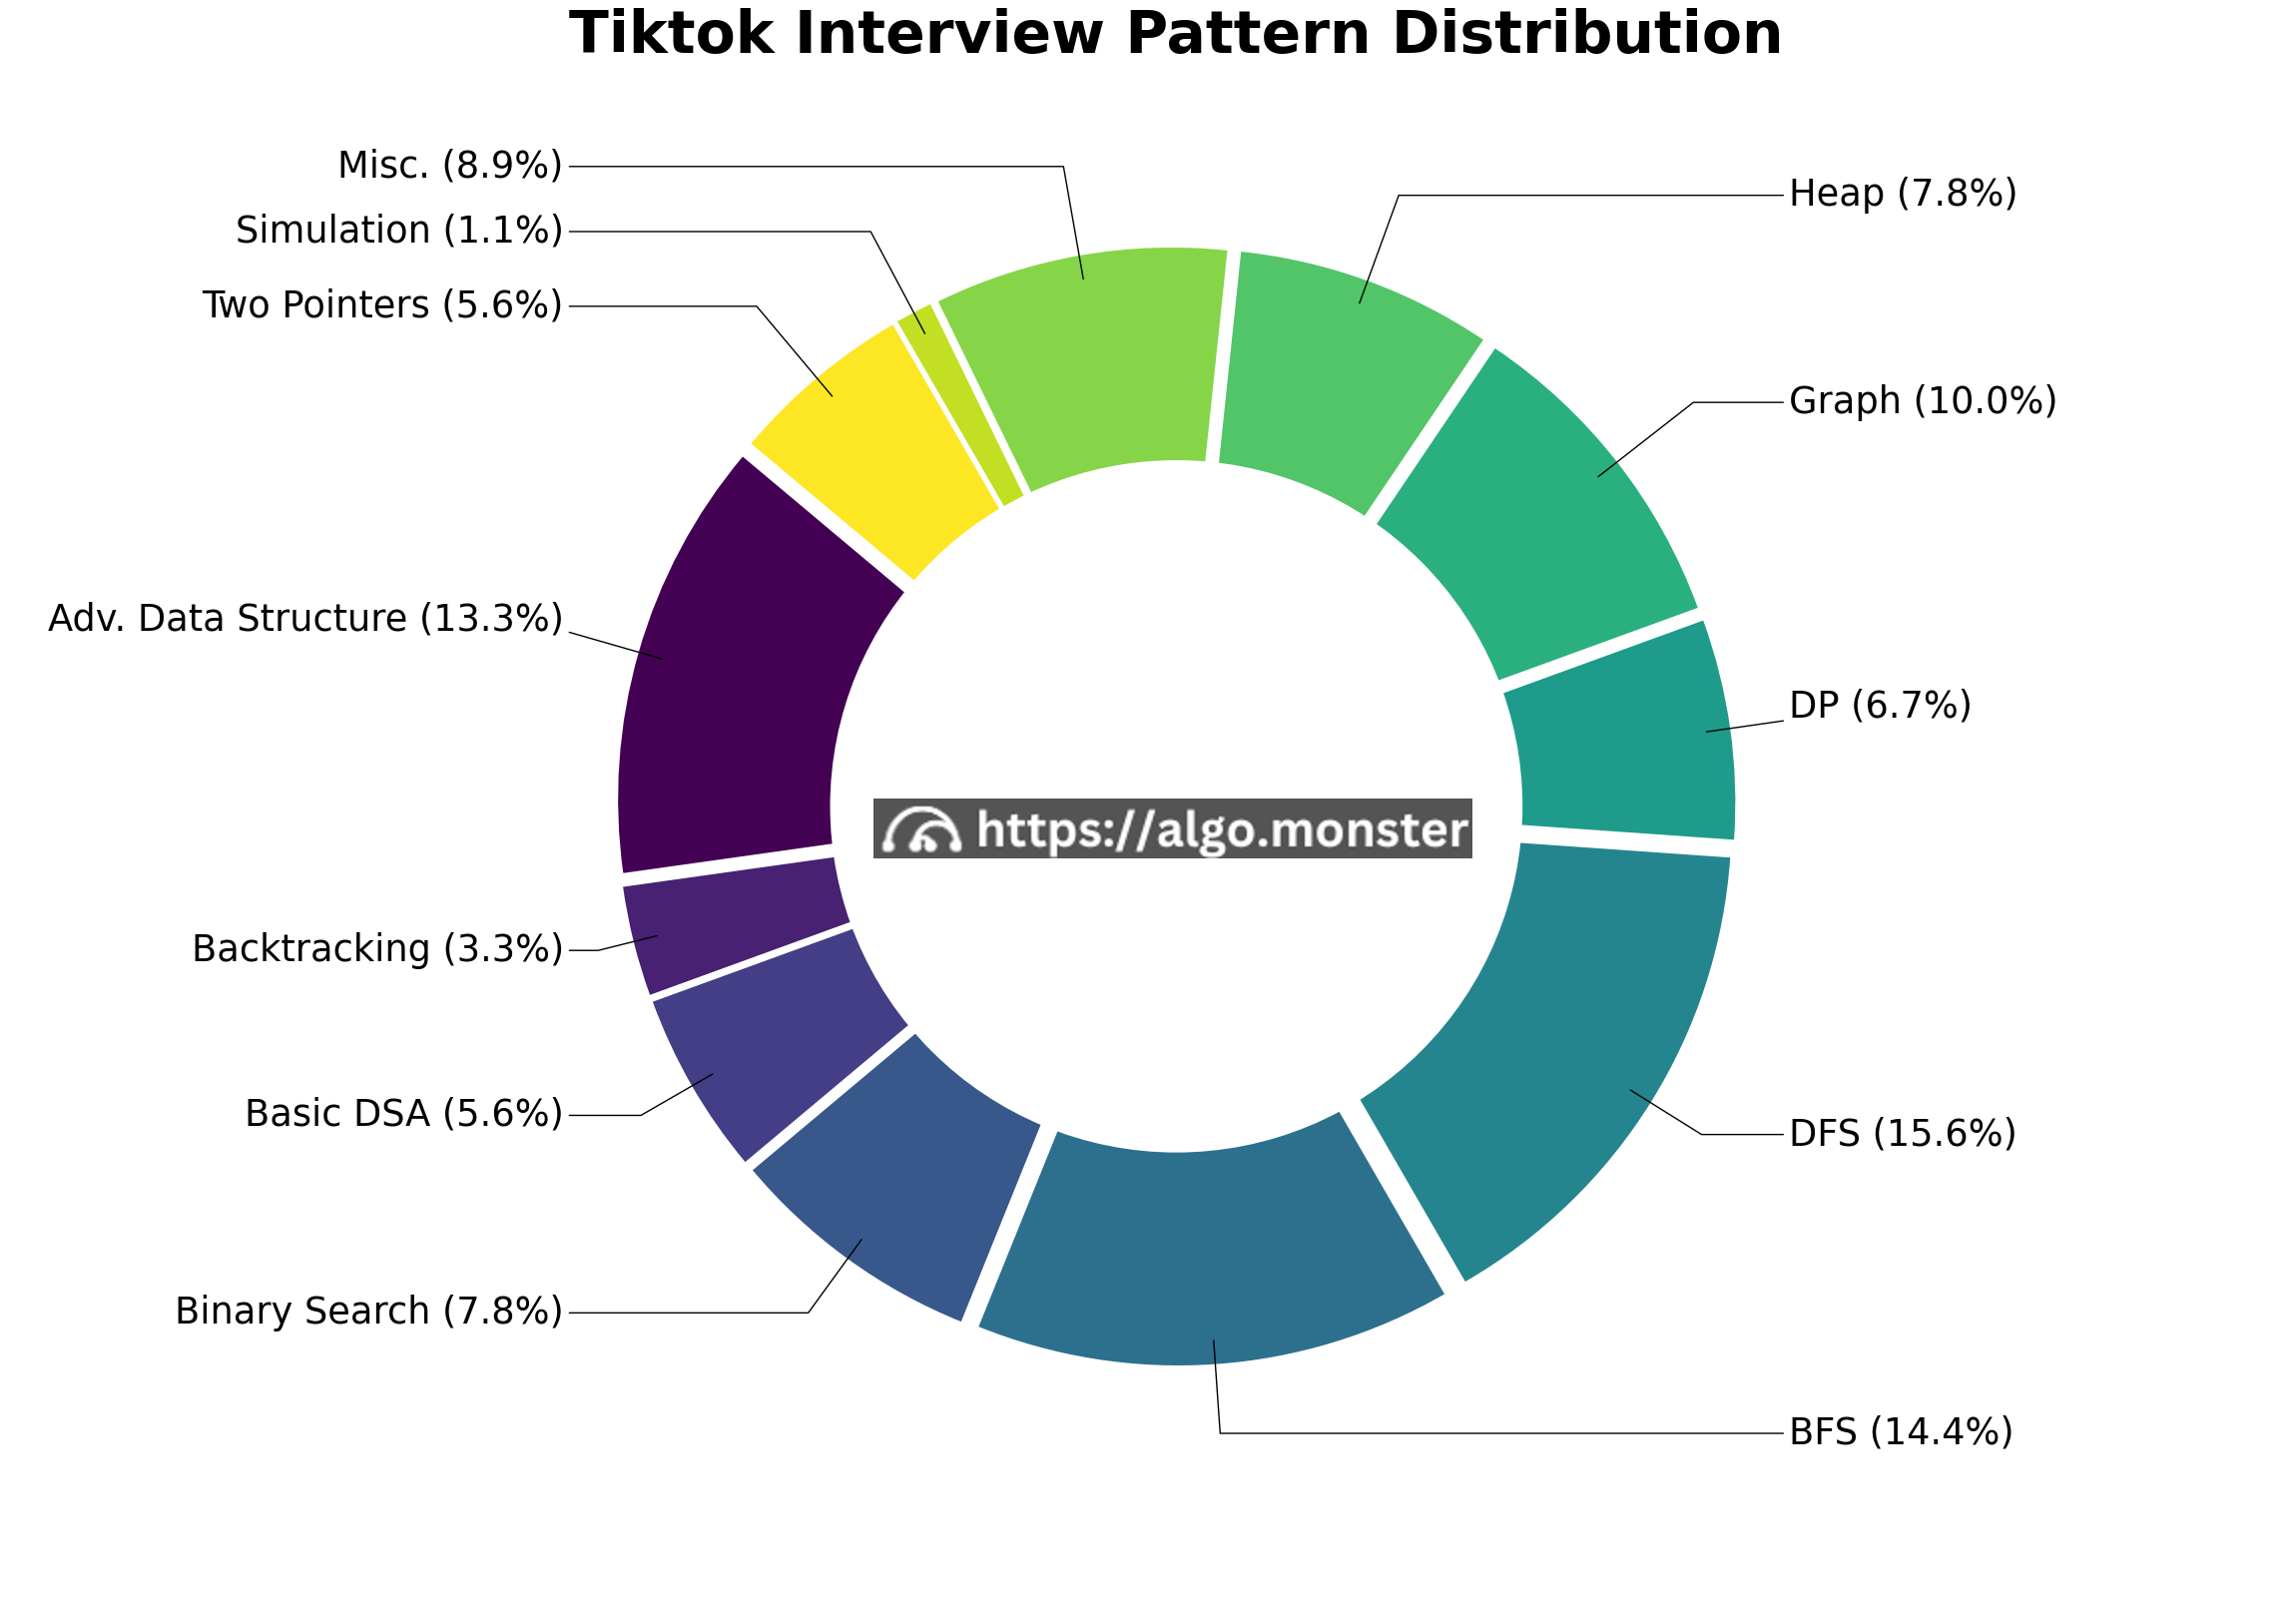 Tiktok interview questions breakdown